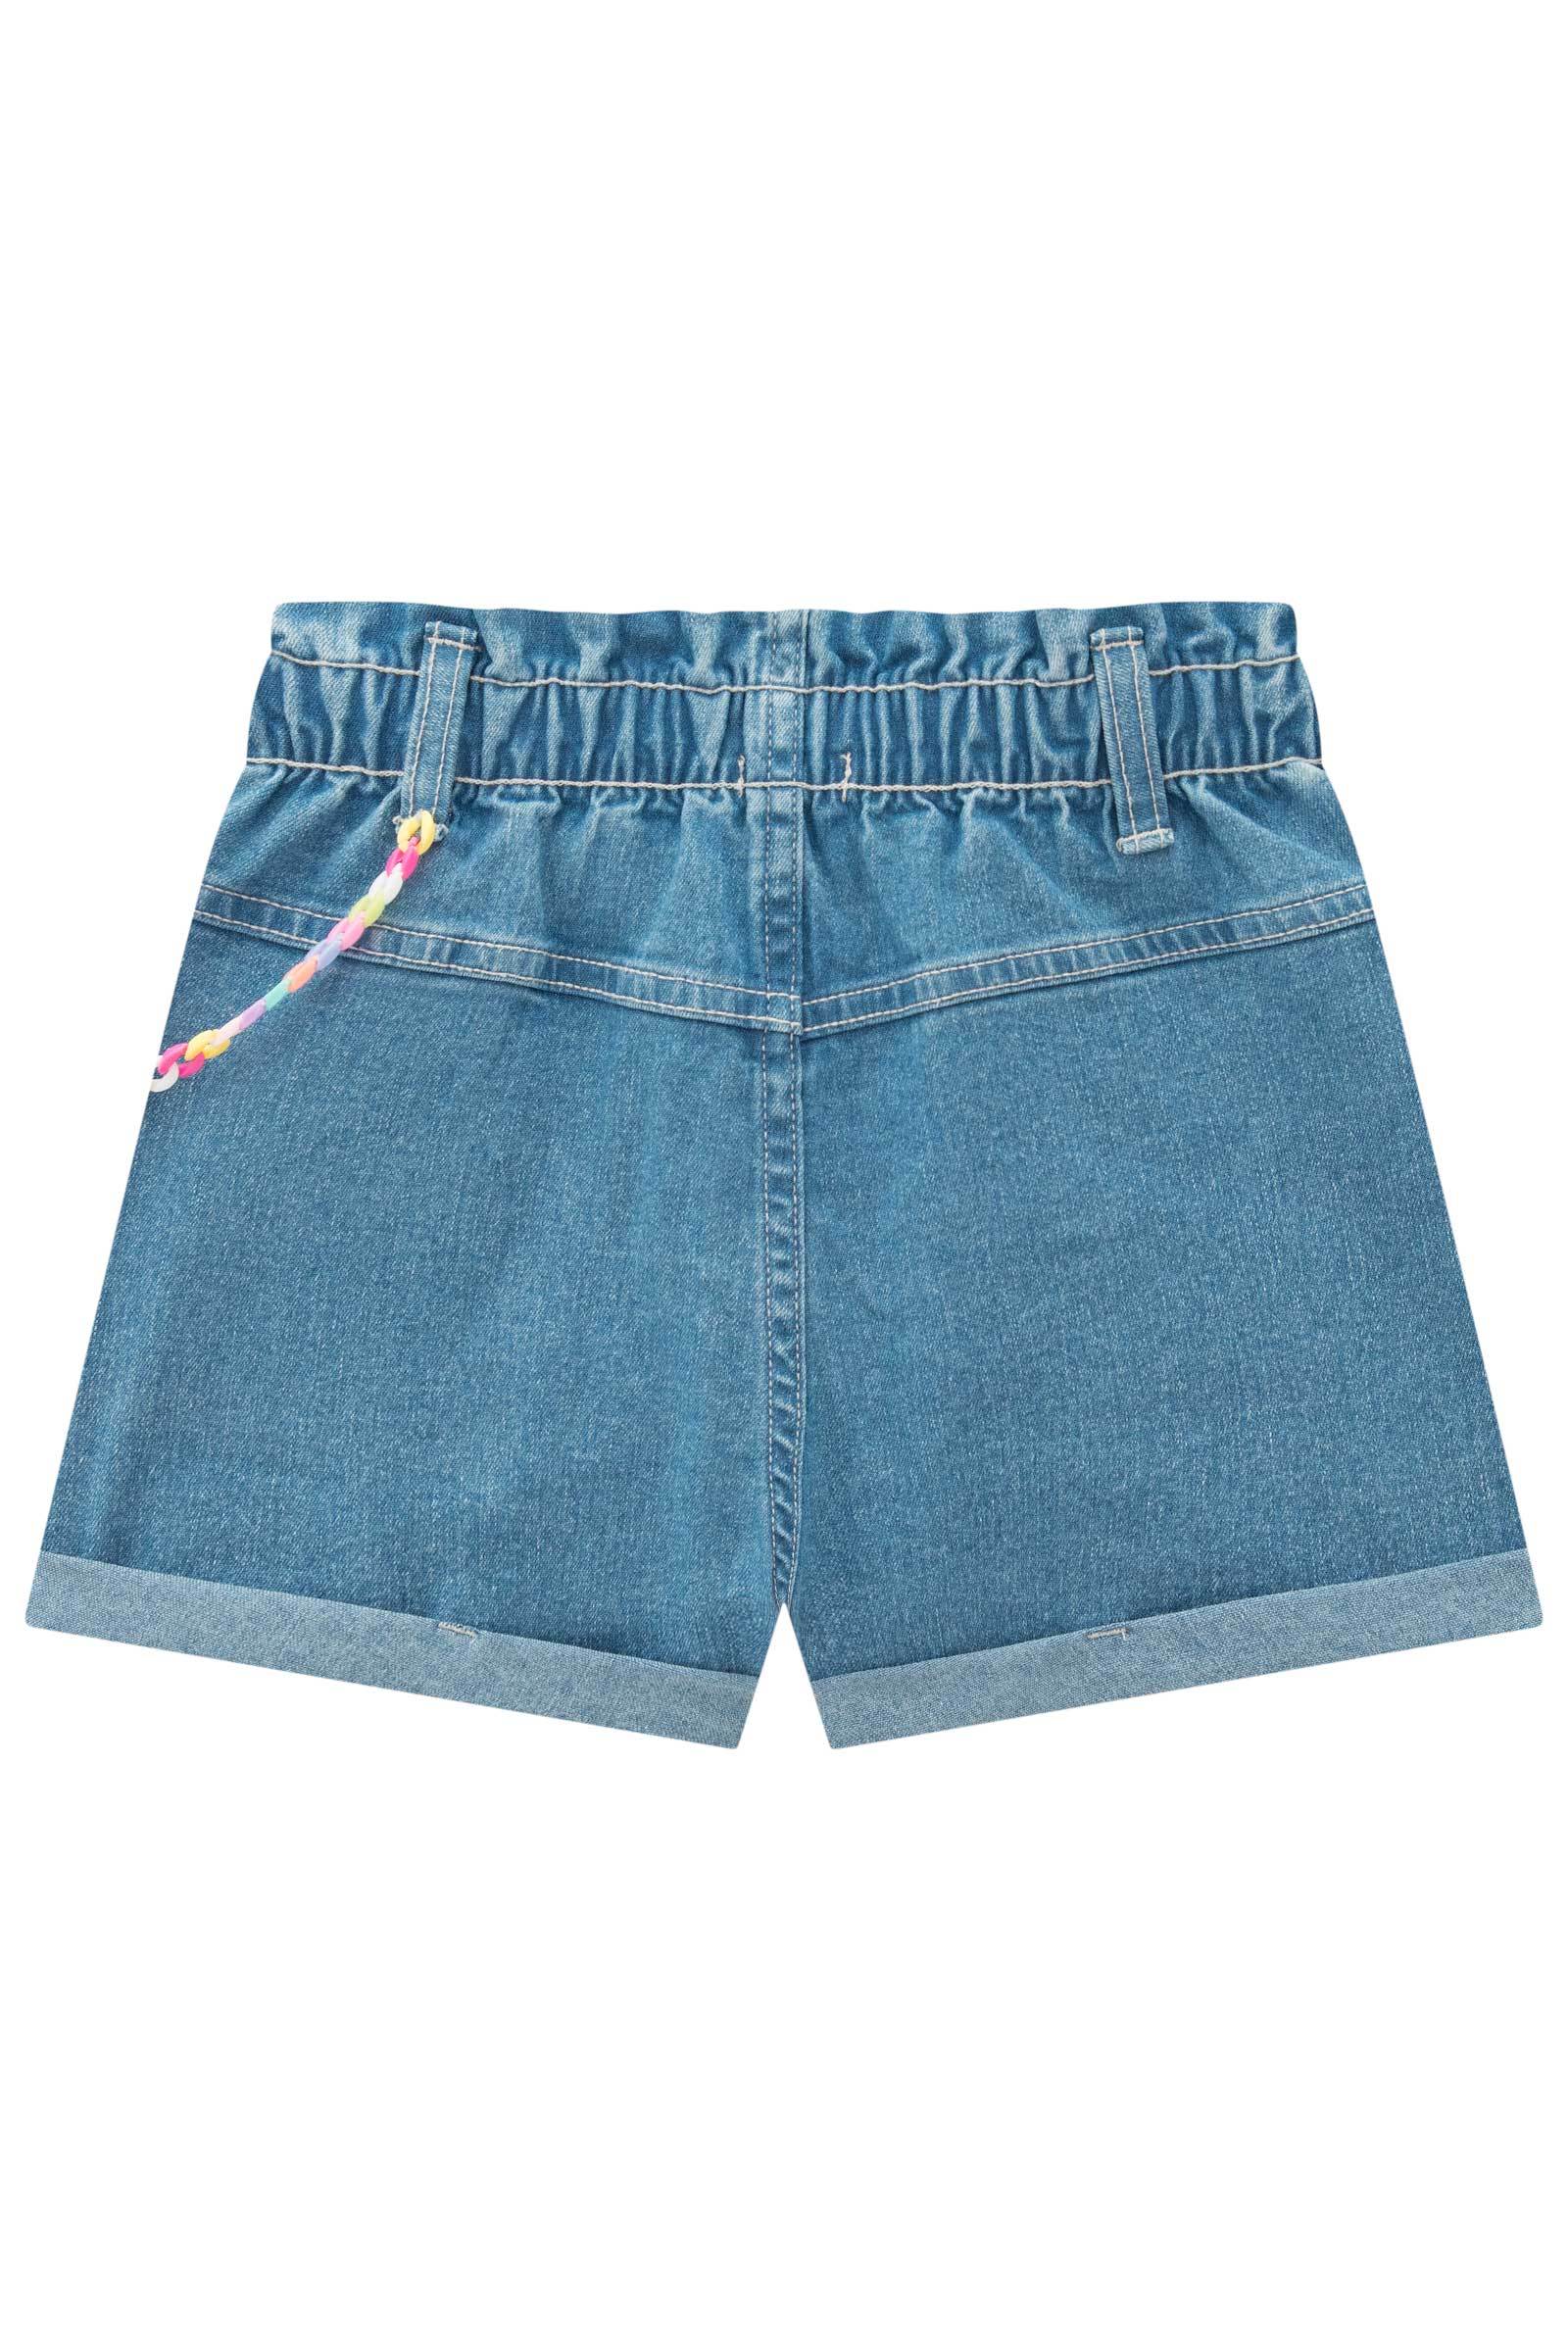 Shorts em Jeans Bellini com Elastano 75682 Infanti